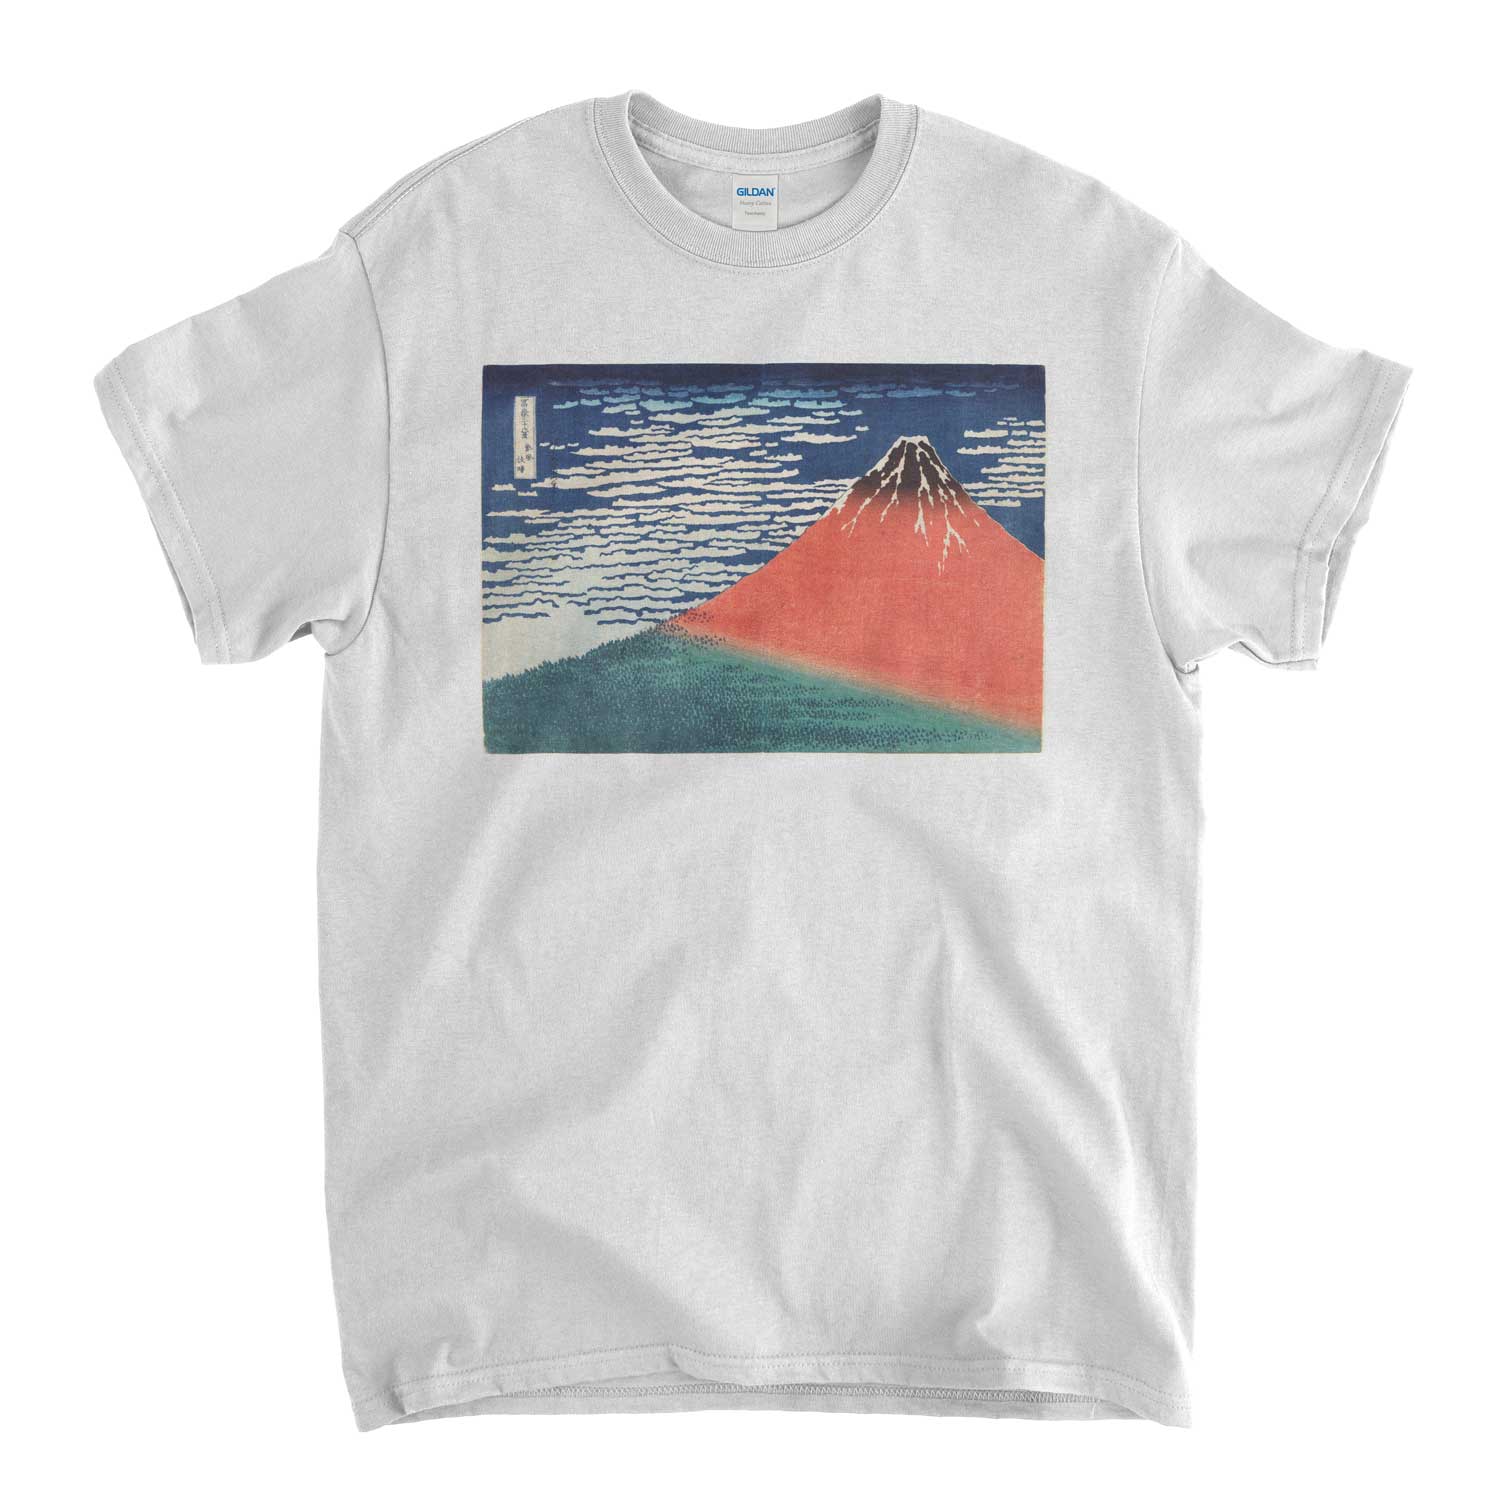 Hokusai T Shirt - Fine Wind, Clear Weather Classic Japanese Art Tee